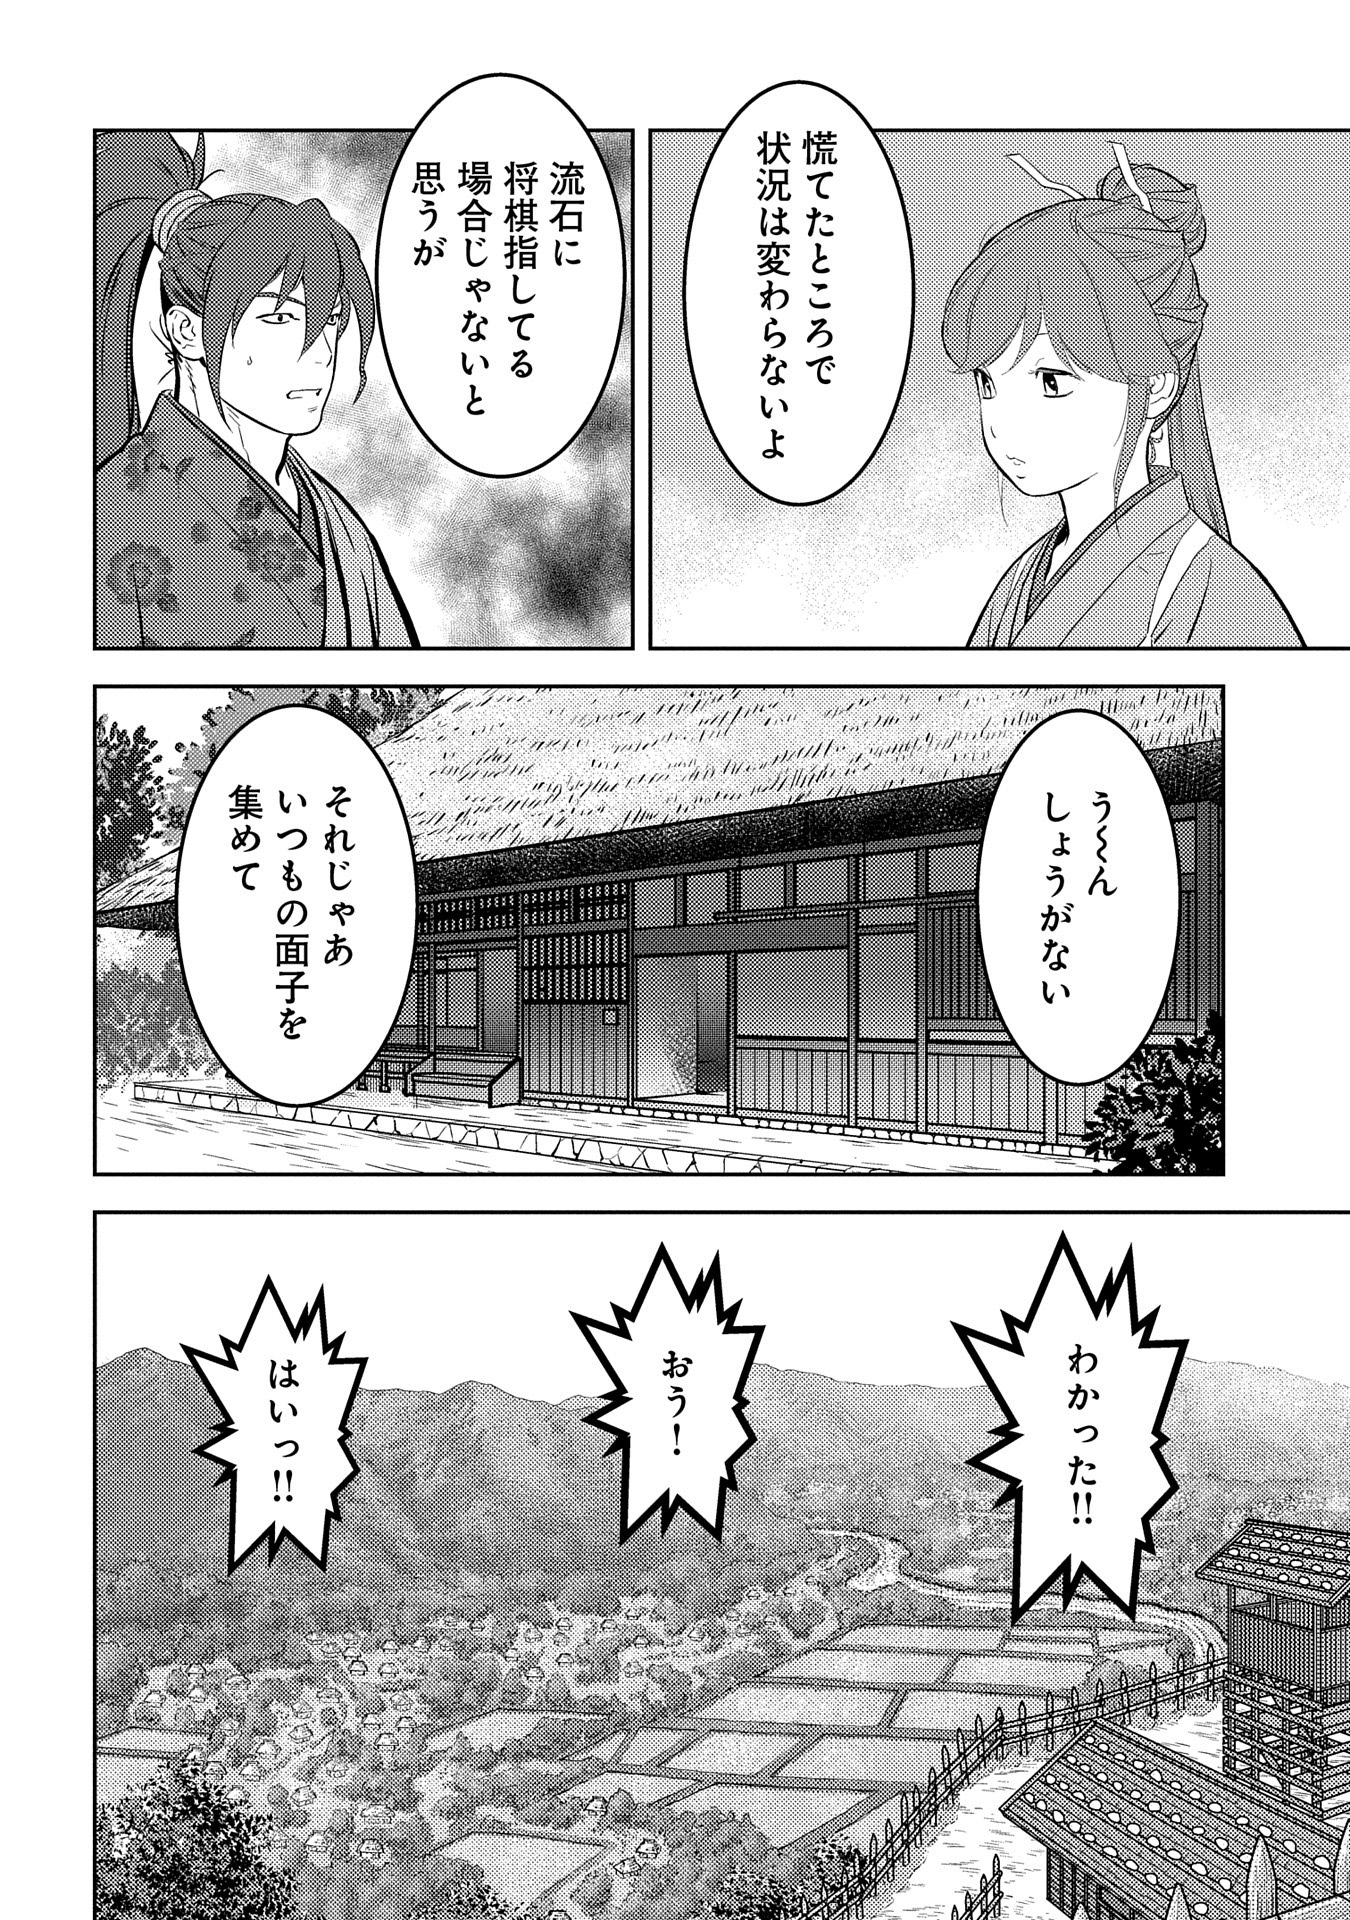 Sengoku Komachi Kuroutan - Chapter 79 - Page 10